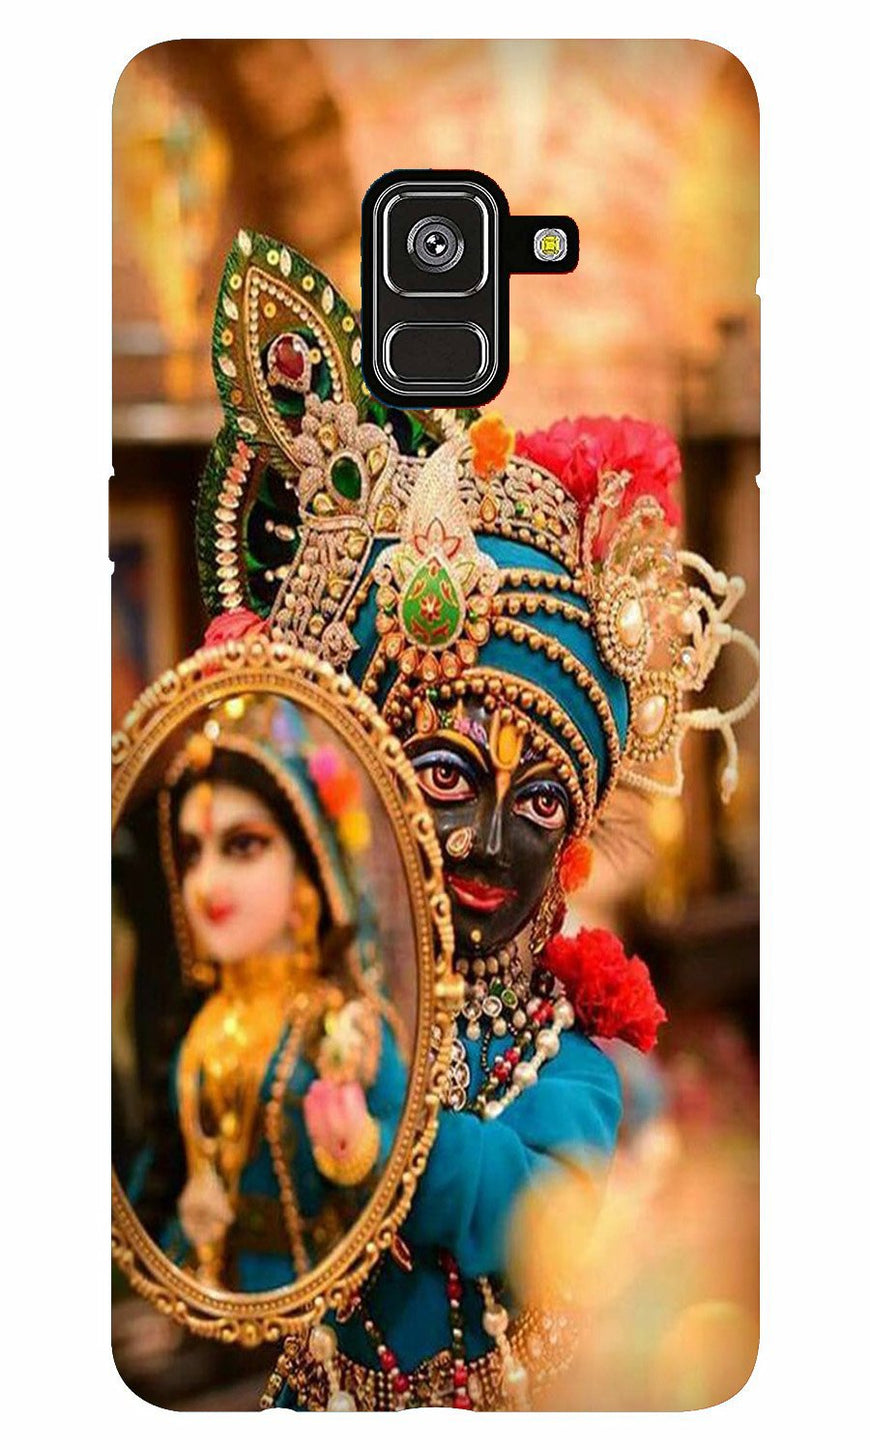 Lord Krishna5 Case for Galaxy A8 Plus